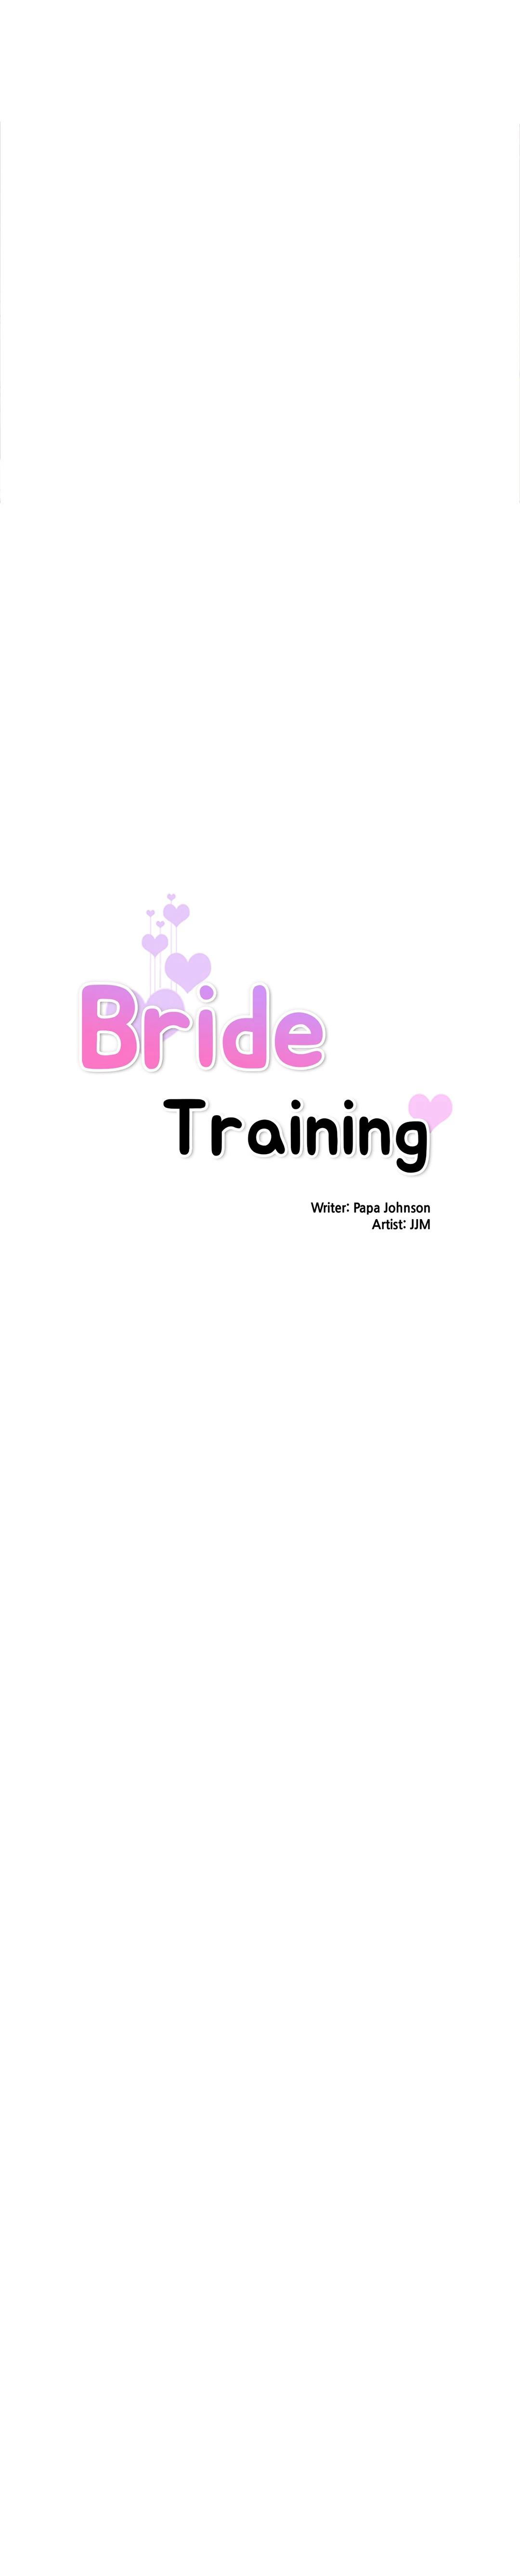 bride-training-chap-24-2